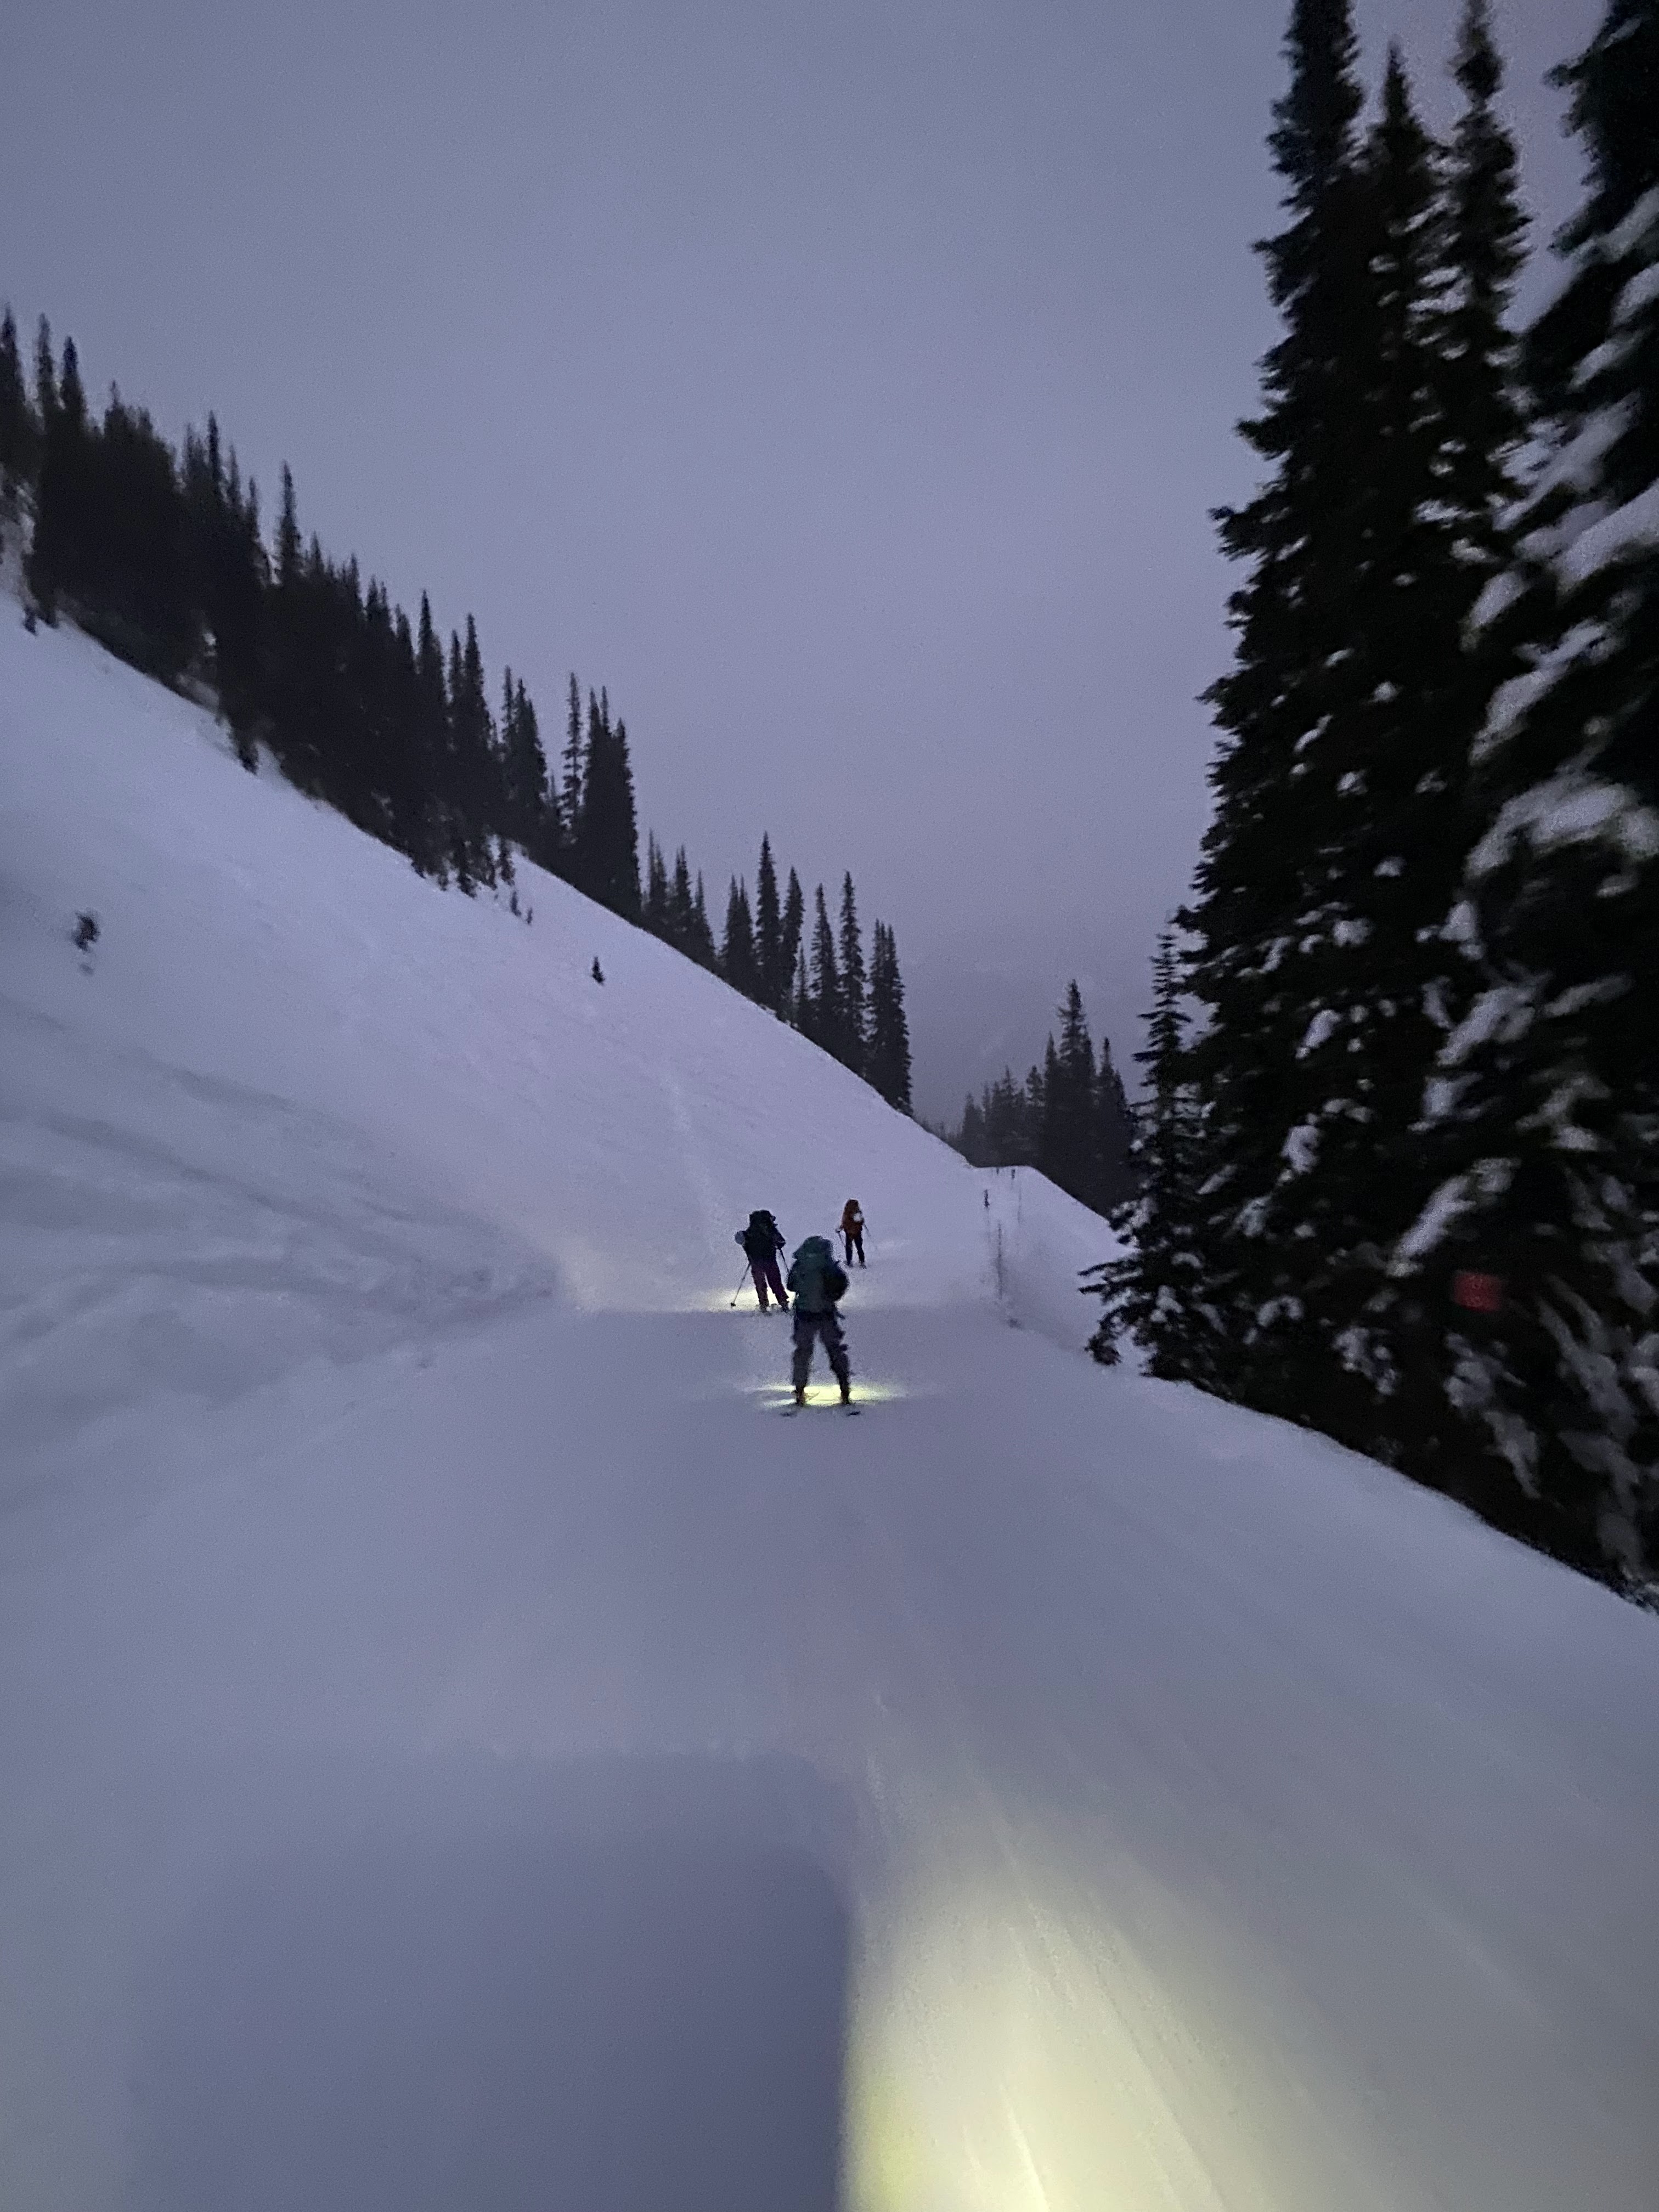 Skiing by headlamp. Photo by Luke